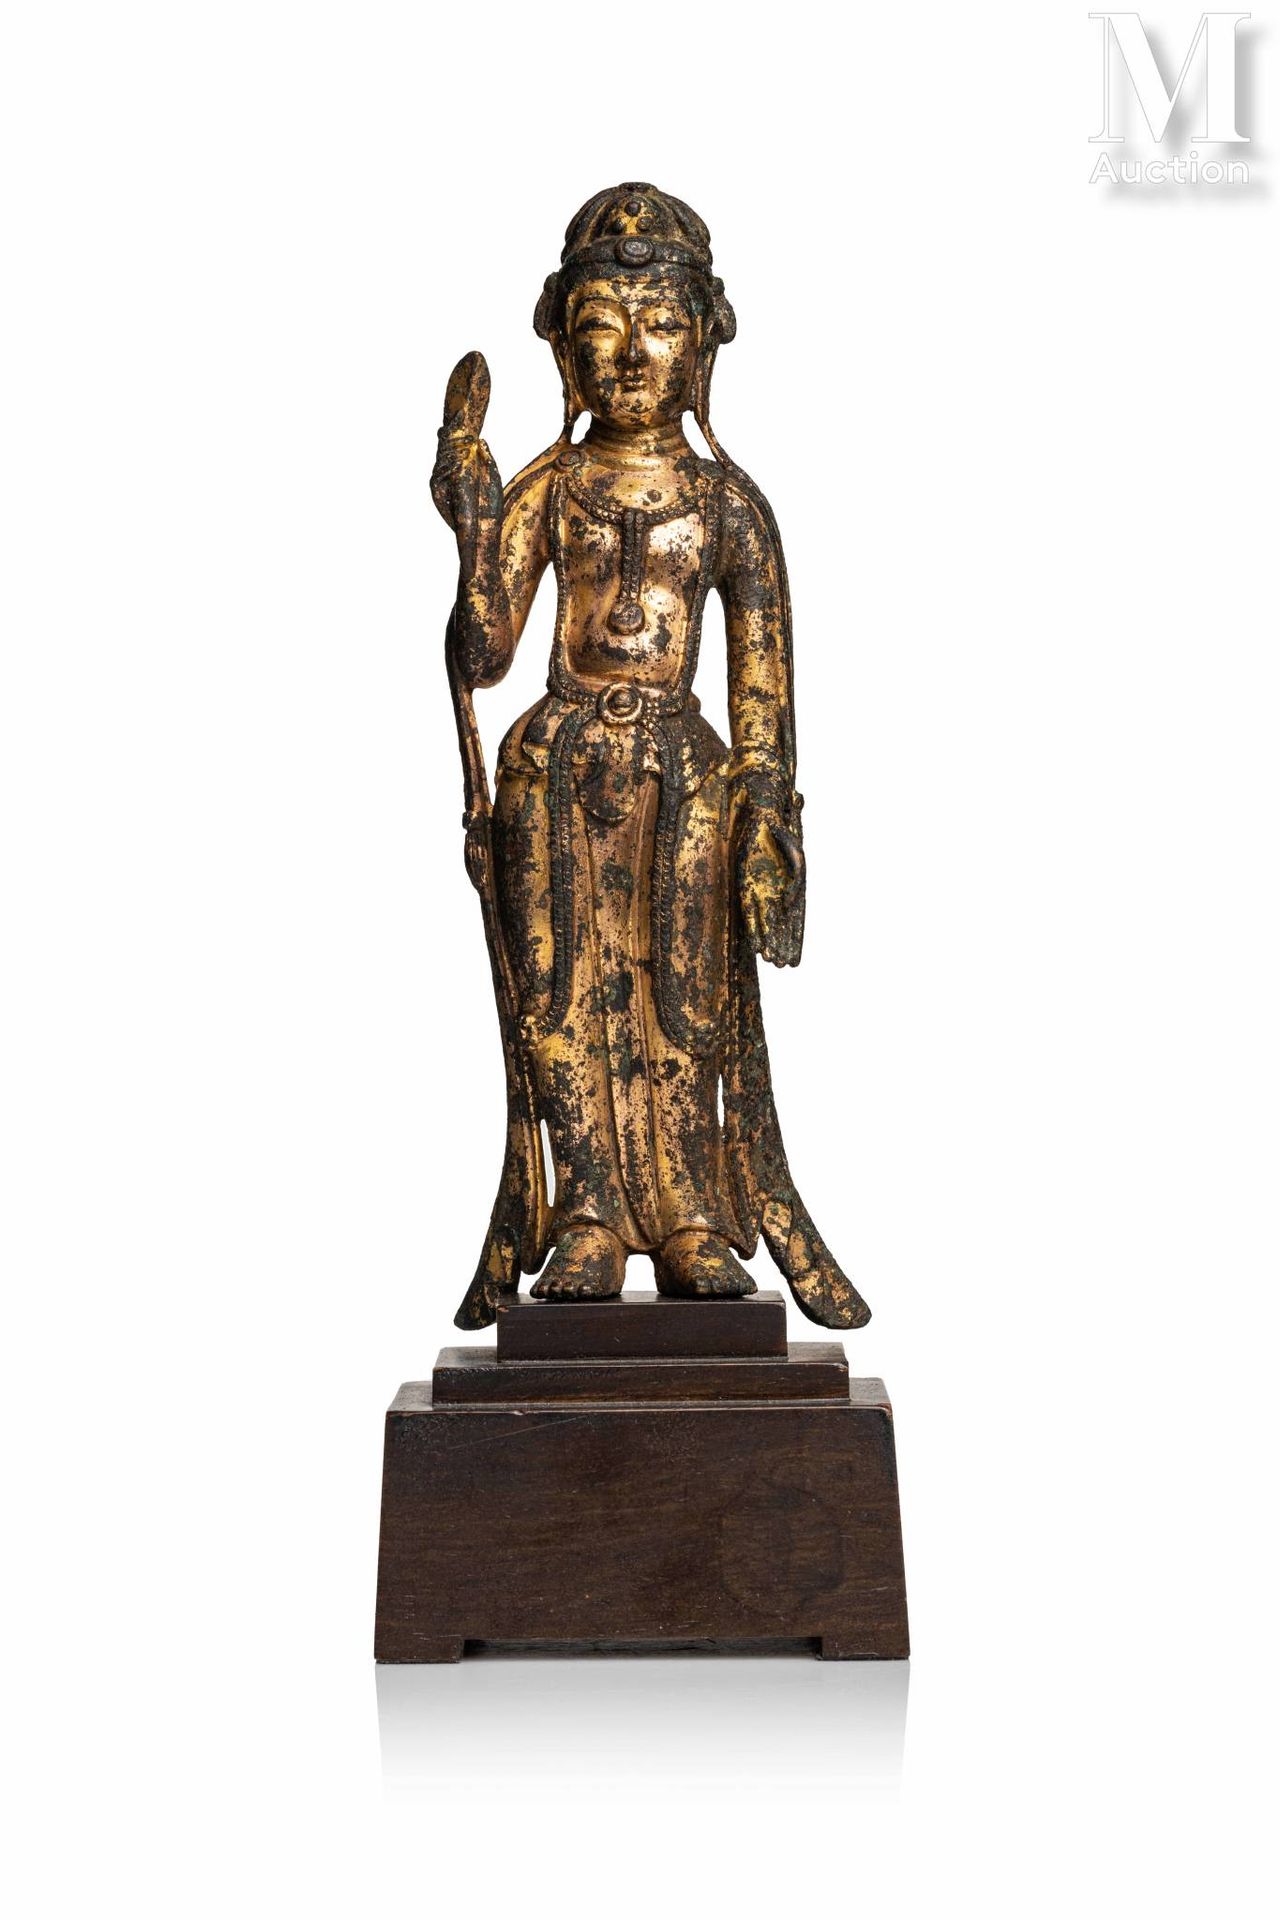 CHINE, Epoque Tang 鎏金铜雕像

代表观世音菩萨站立，一只手可能原来拿着一个属性，另一只手拿着柳树枝，身穿dhoti，装饰着许多珠宝，面部表情&hellip;